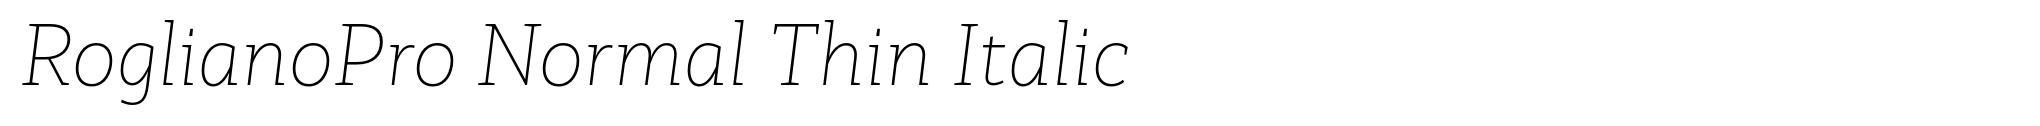 RoglianoPro Normal Thin Italic image